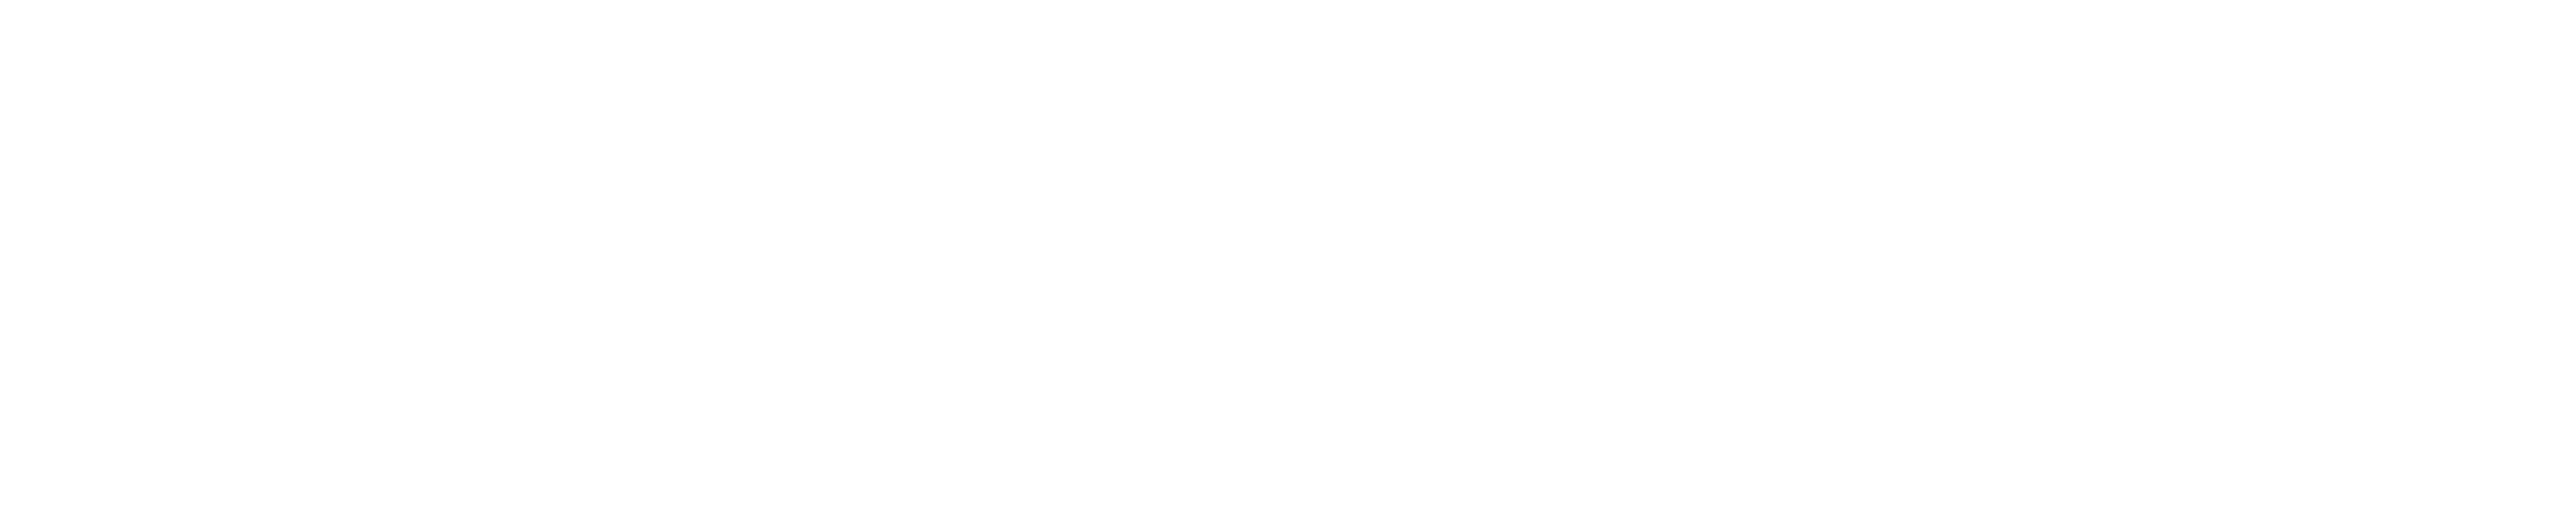 Enedis logo